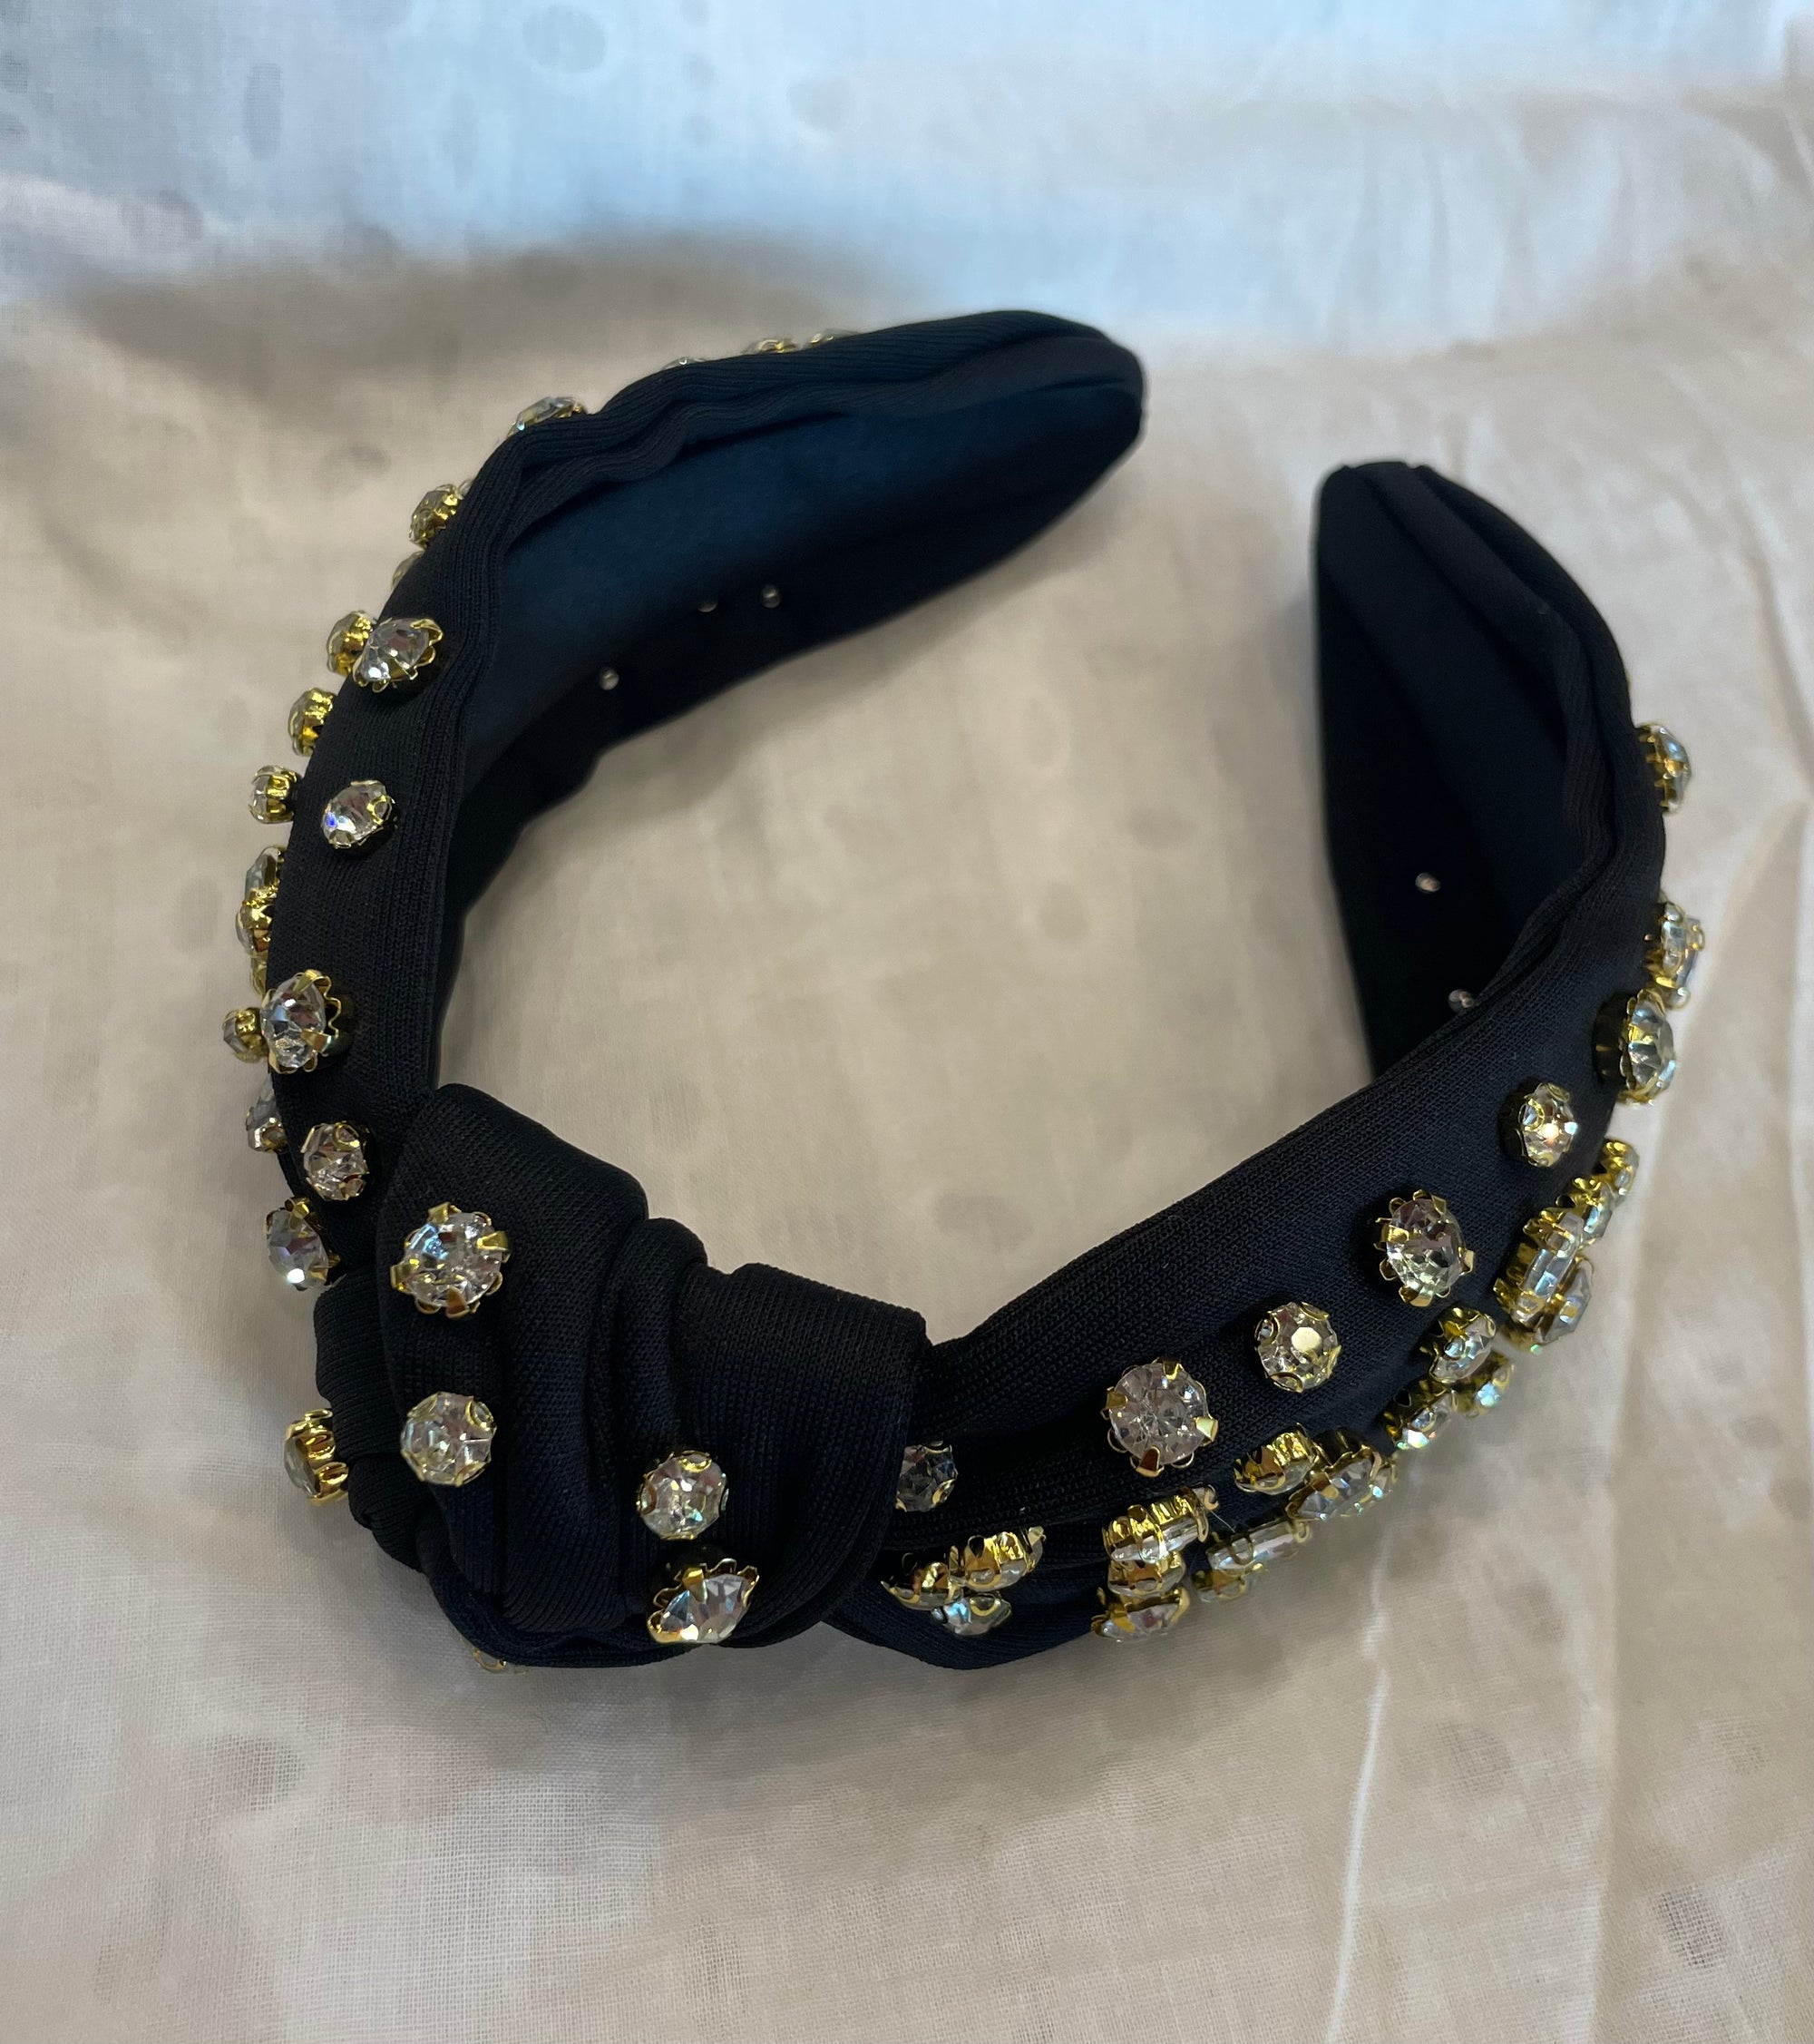 Caddo Queen Headband - Black w/Rhinestones